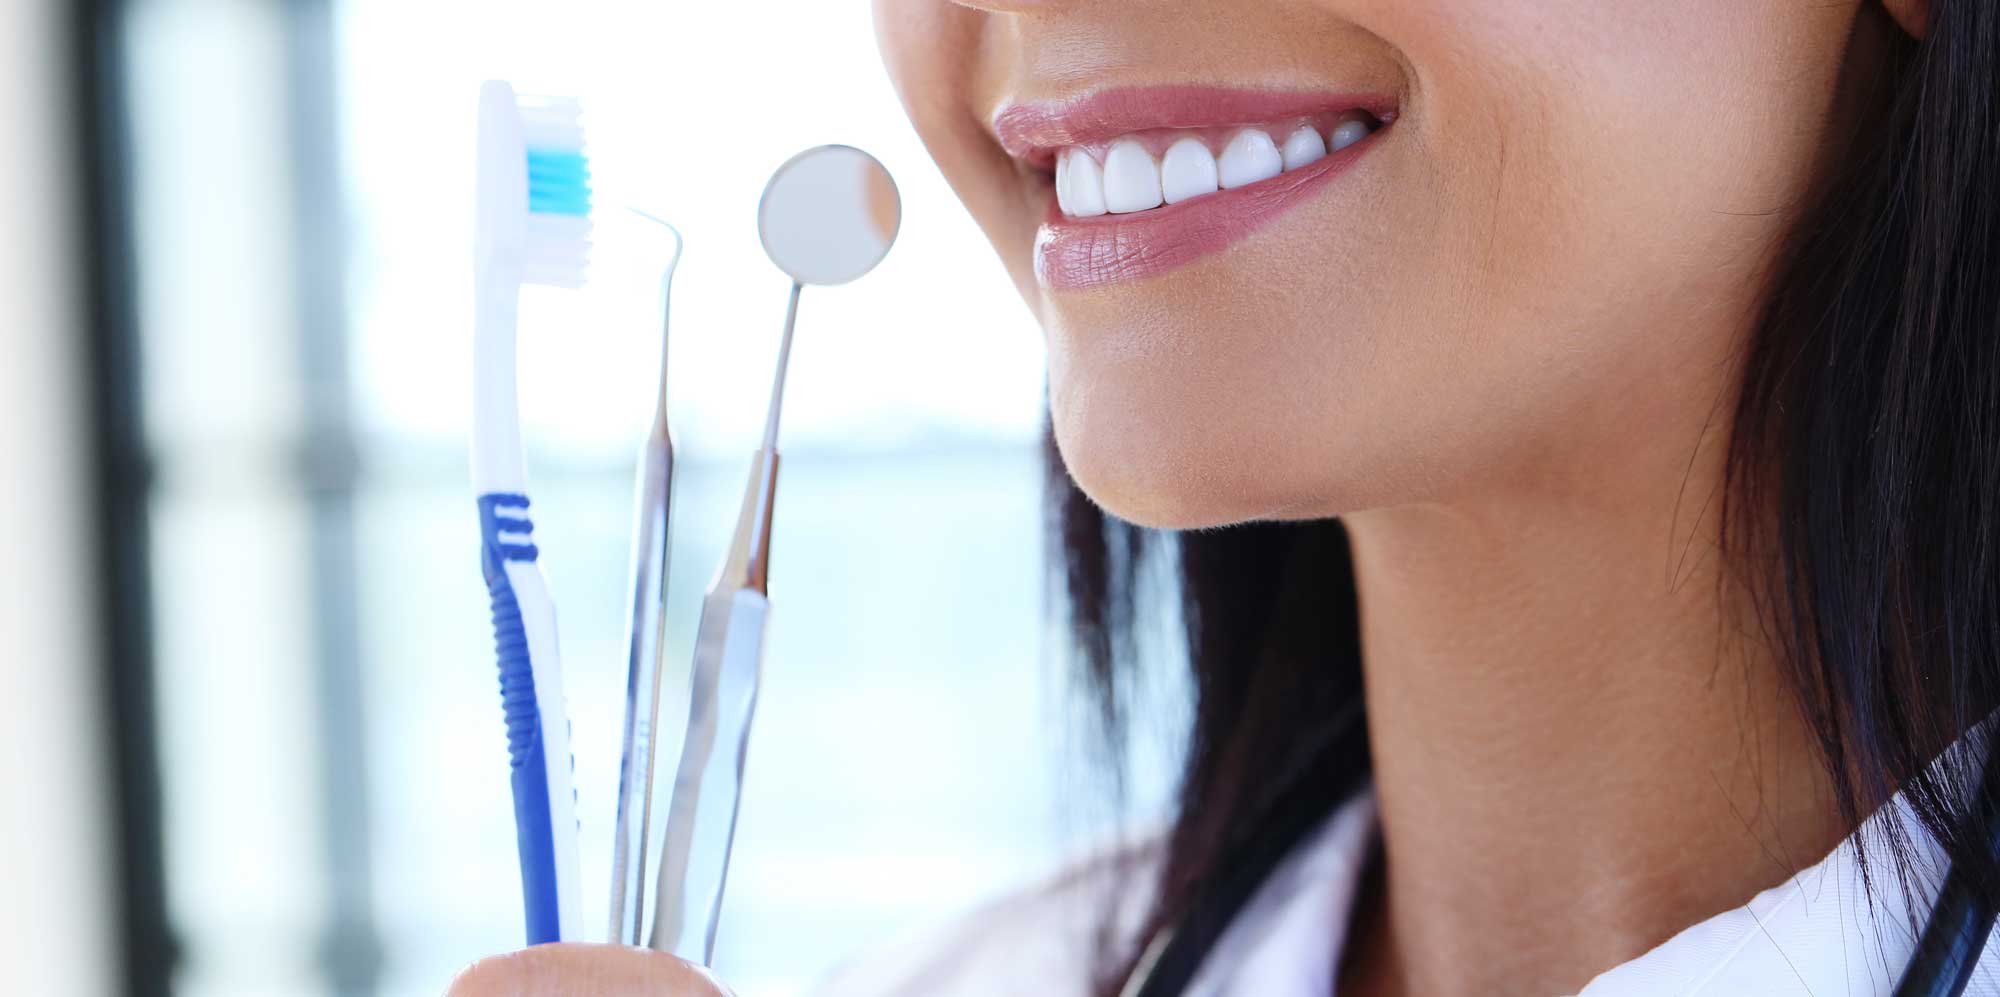 Pulizia e igiene dentale professionale